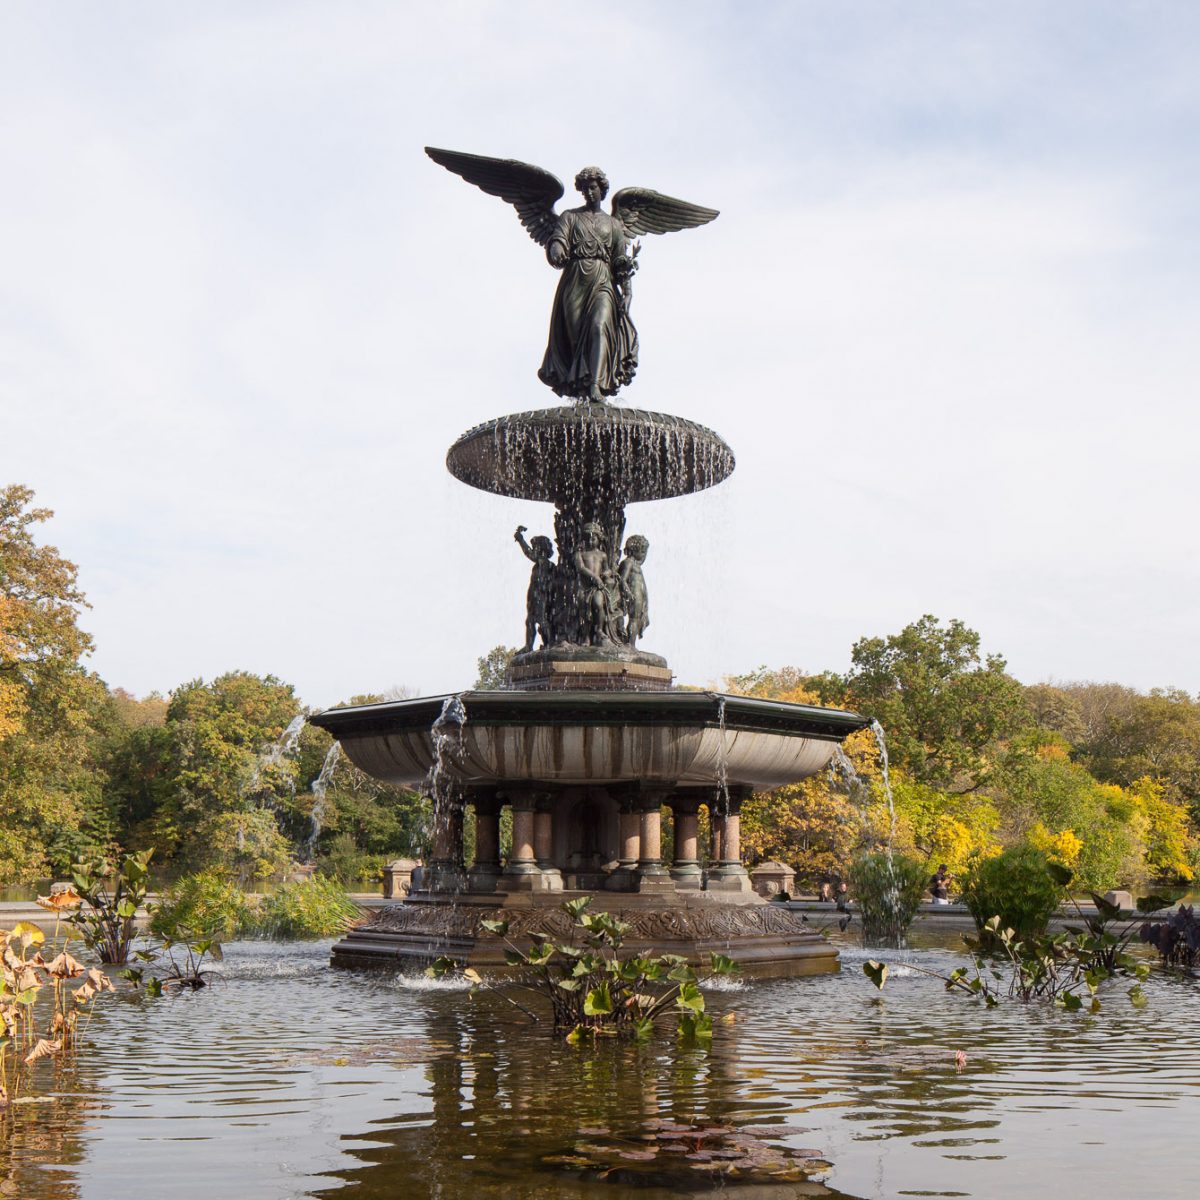 Bethesda Fountain, Central Park, Manhattan